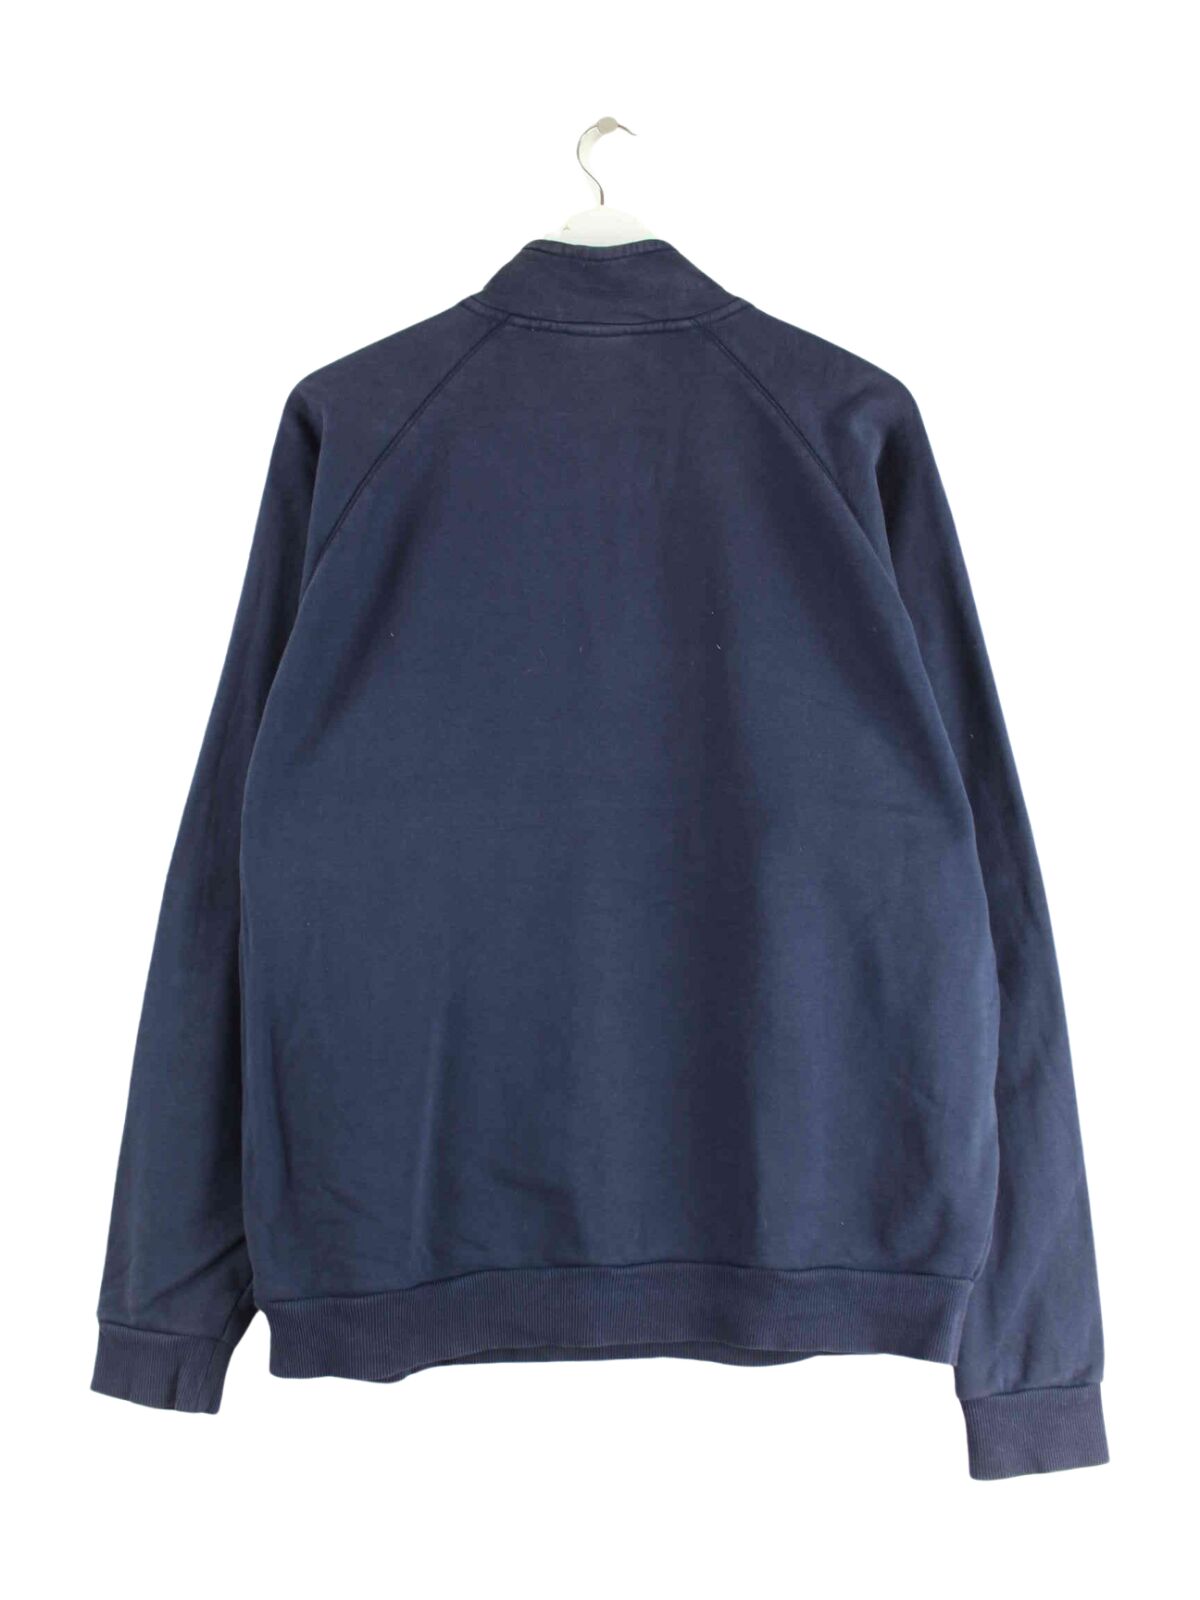 Lacoste 00s Half Zip Sweater Blau XL (back image)